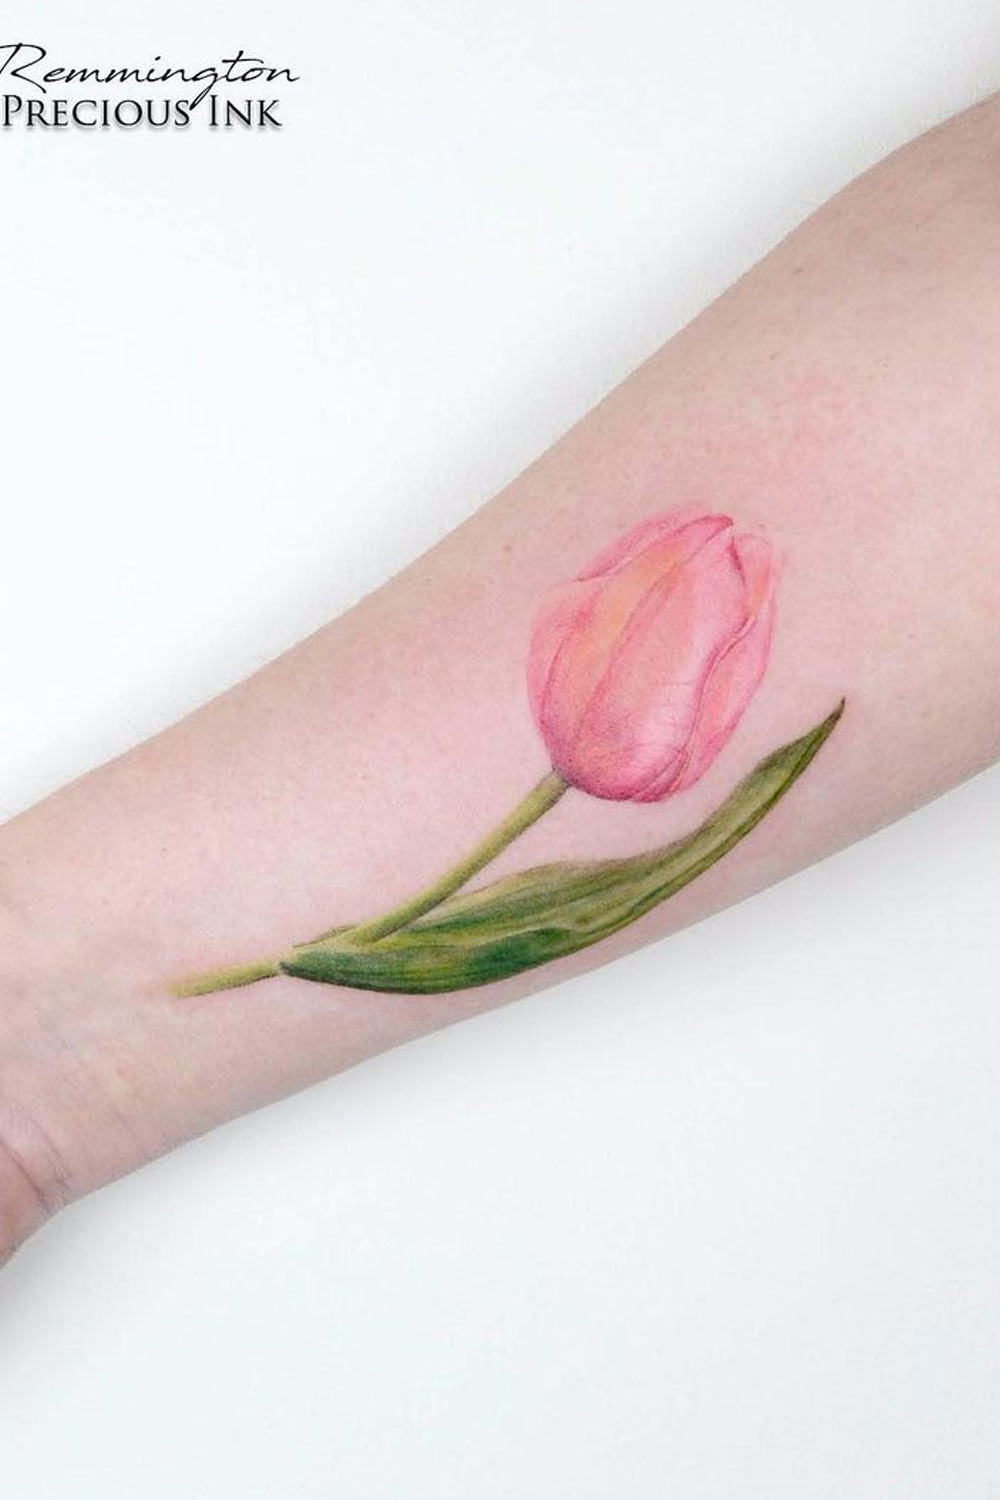 Watercolor Tulip Flower Tattoo Design